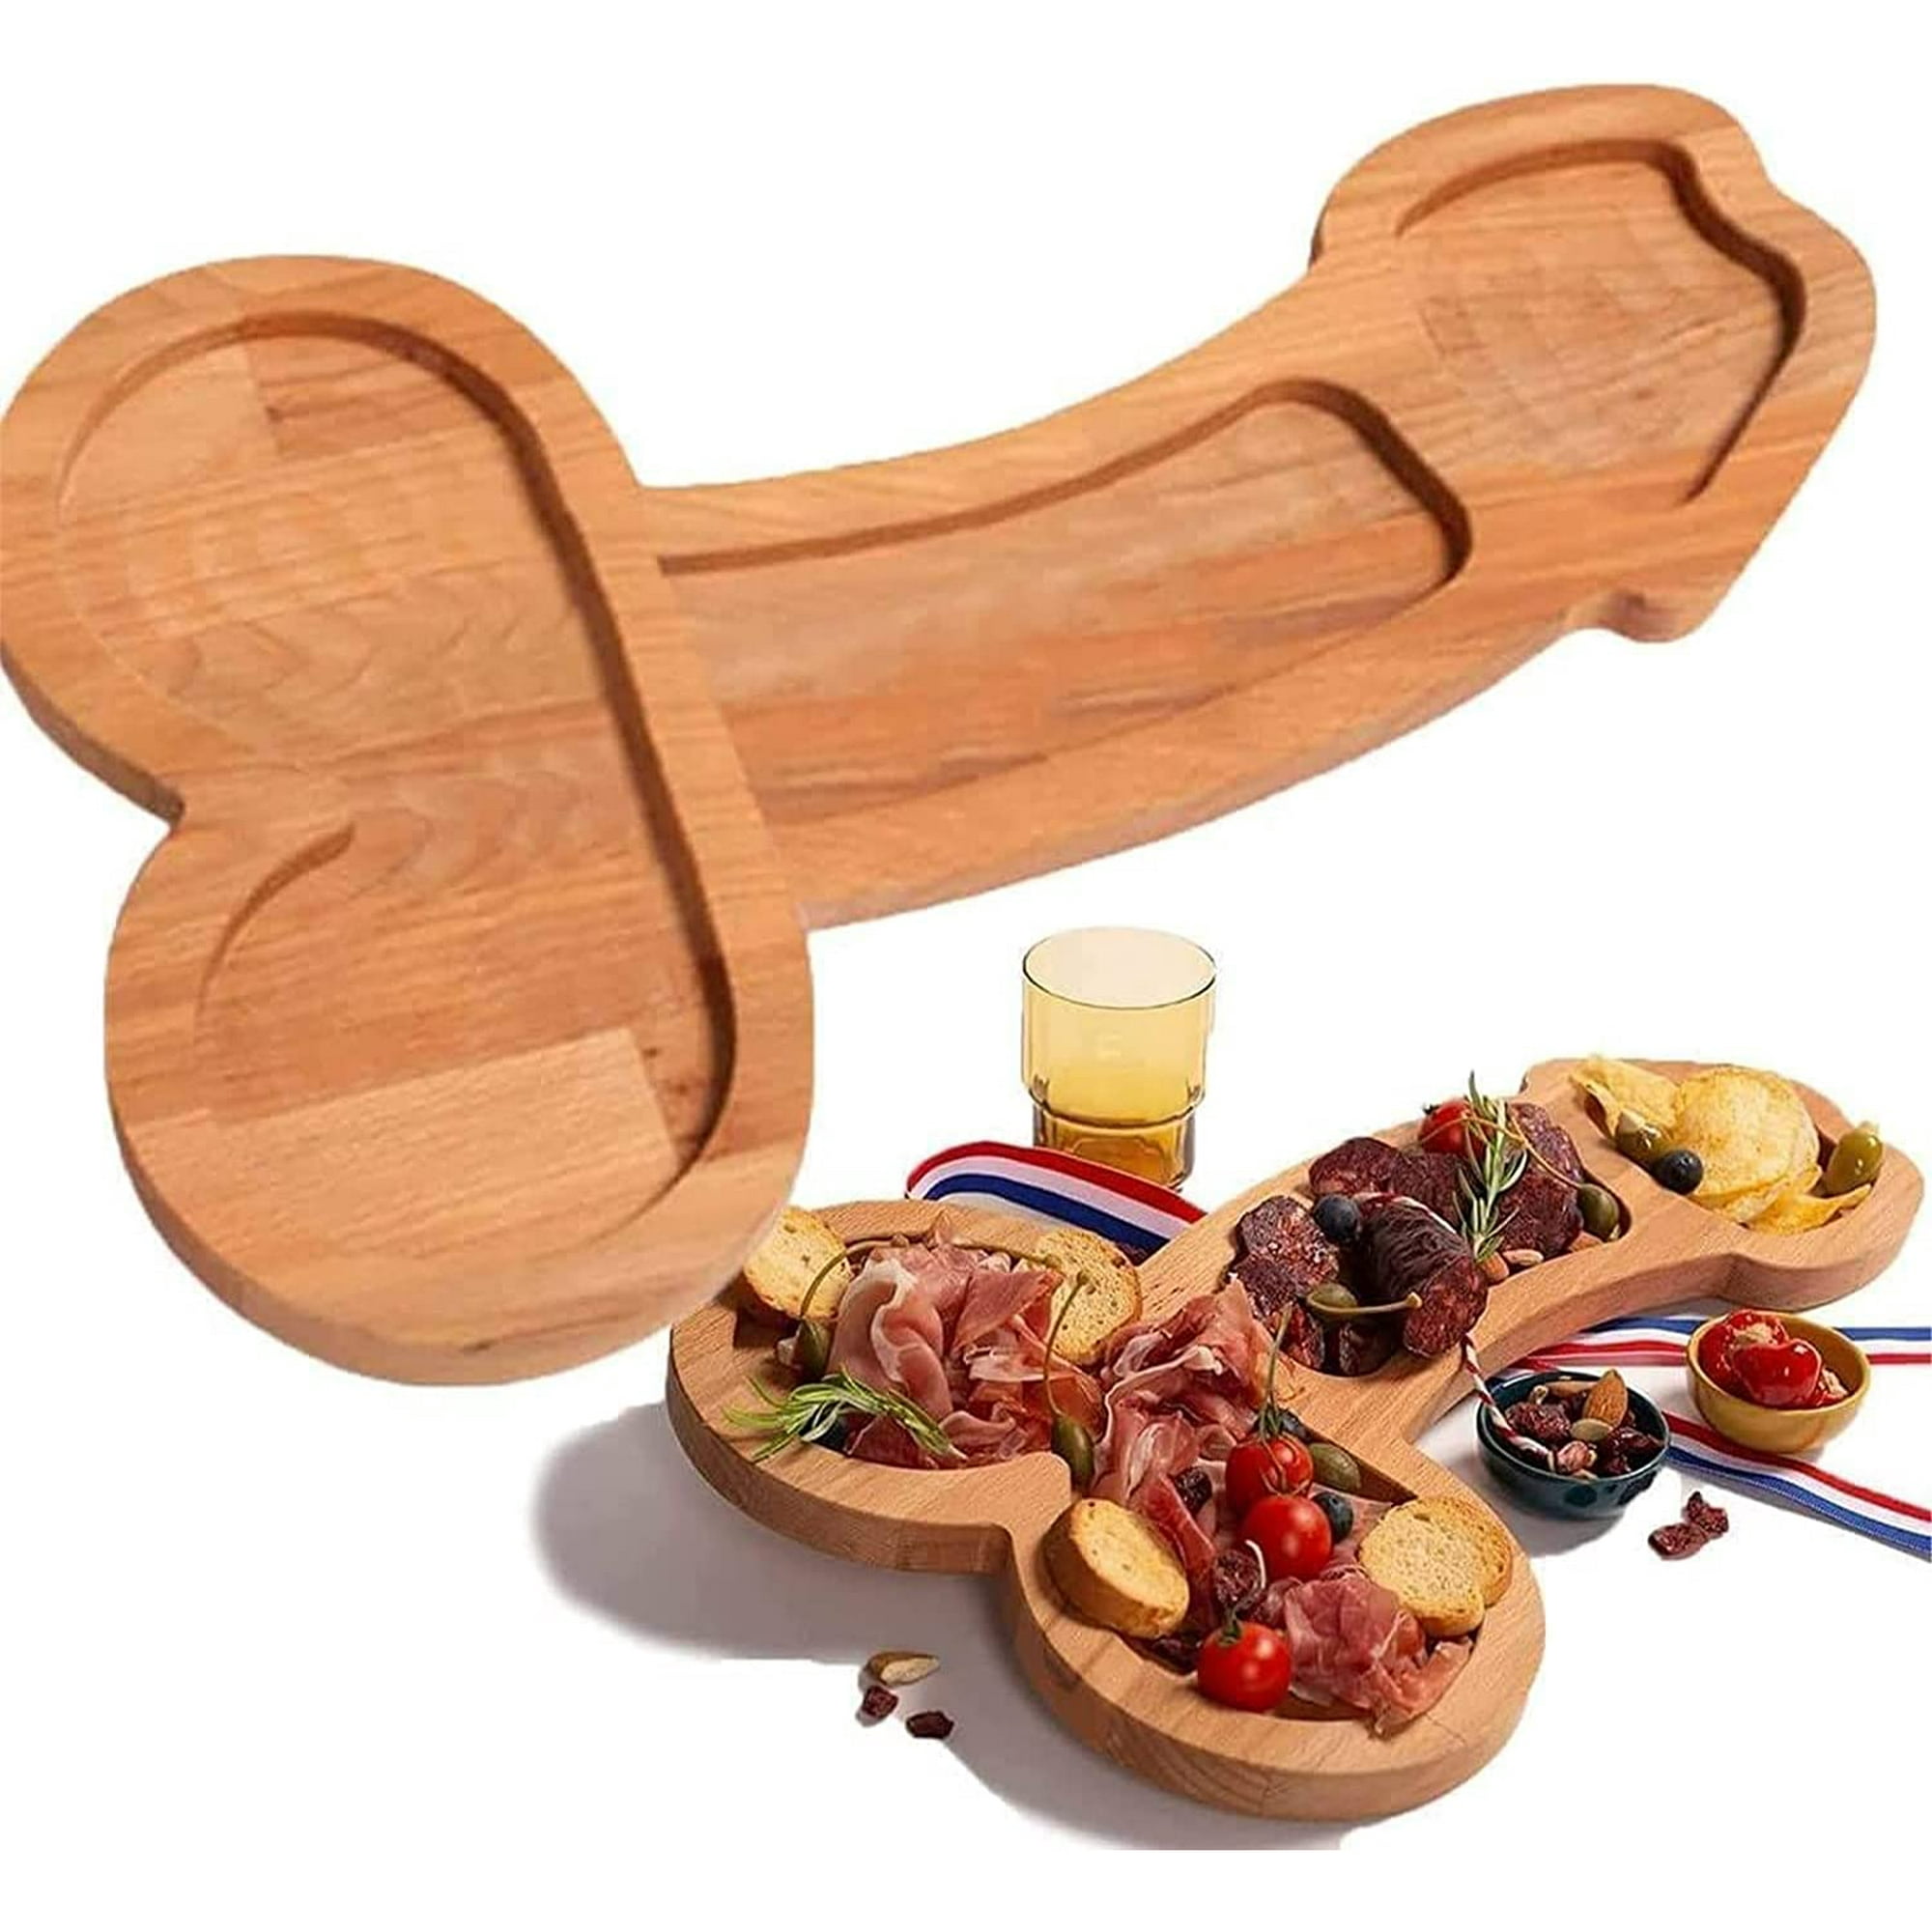 Platos de madera para embutidos, pizza o sushi